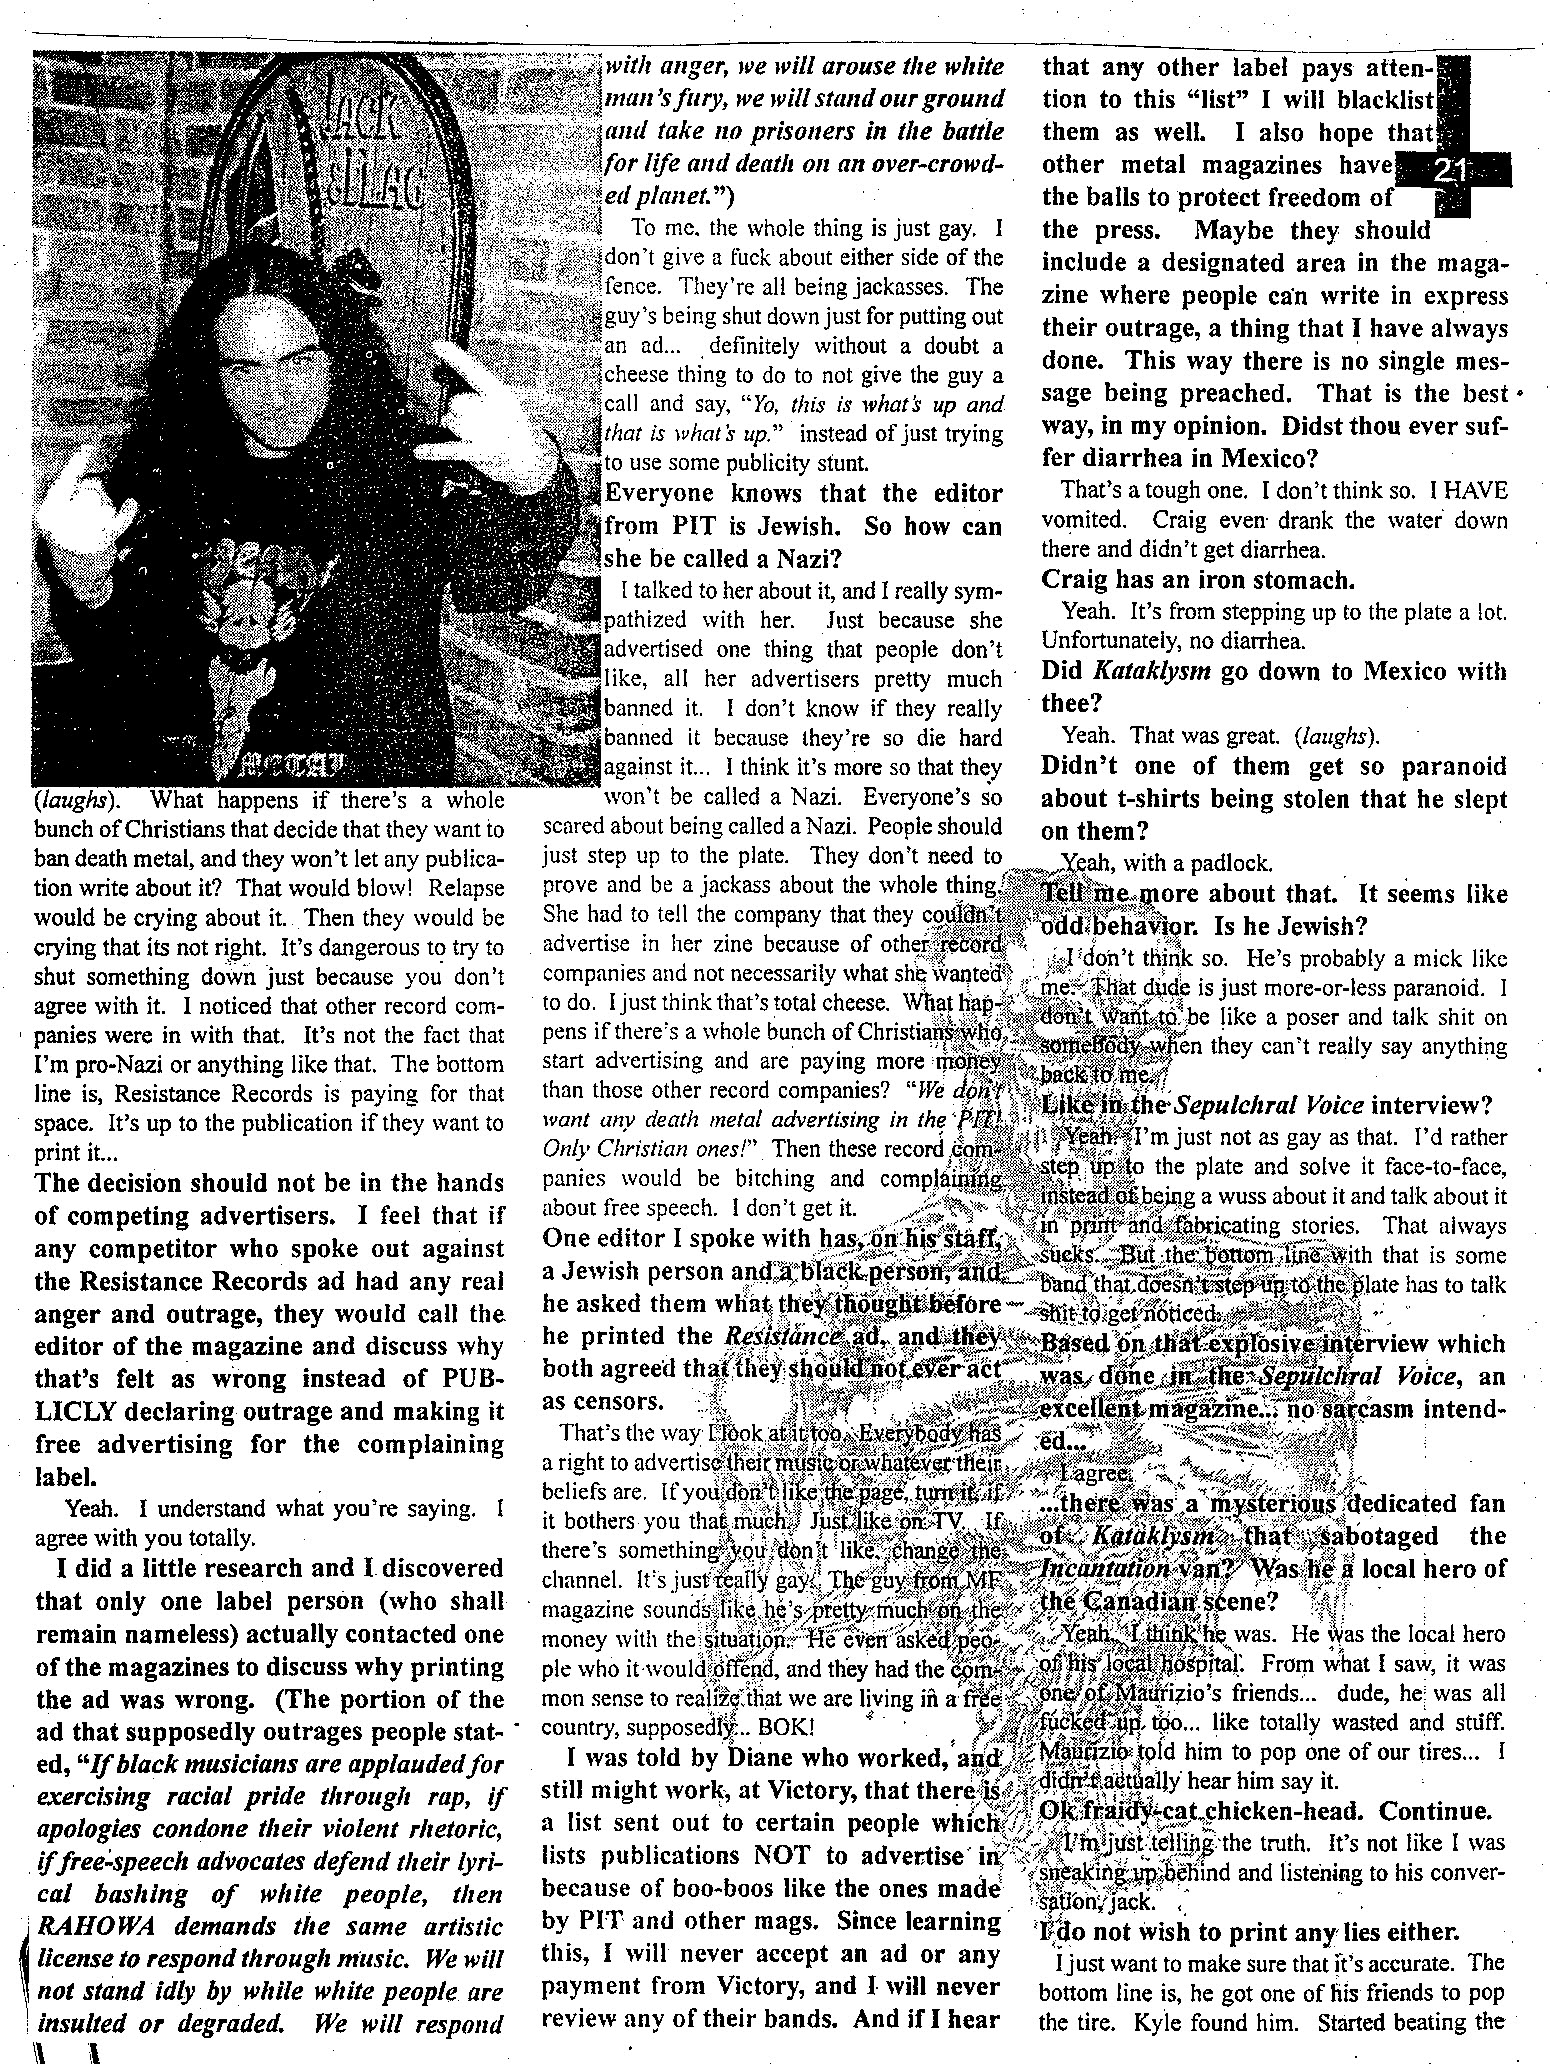 https://i.postimg.cc/PdzFKGJJ/Incantation-interview-from-Grimoire-6-b-heavymetalrarities-com.jpg